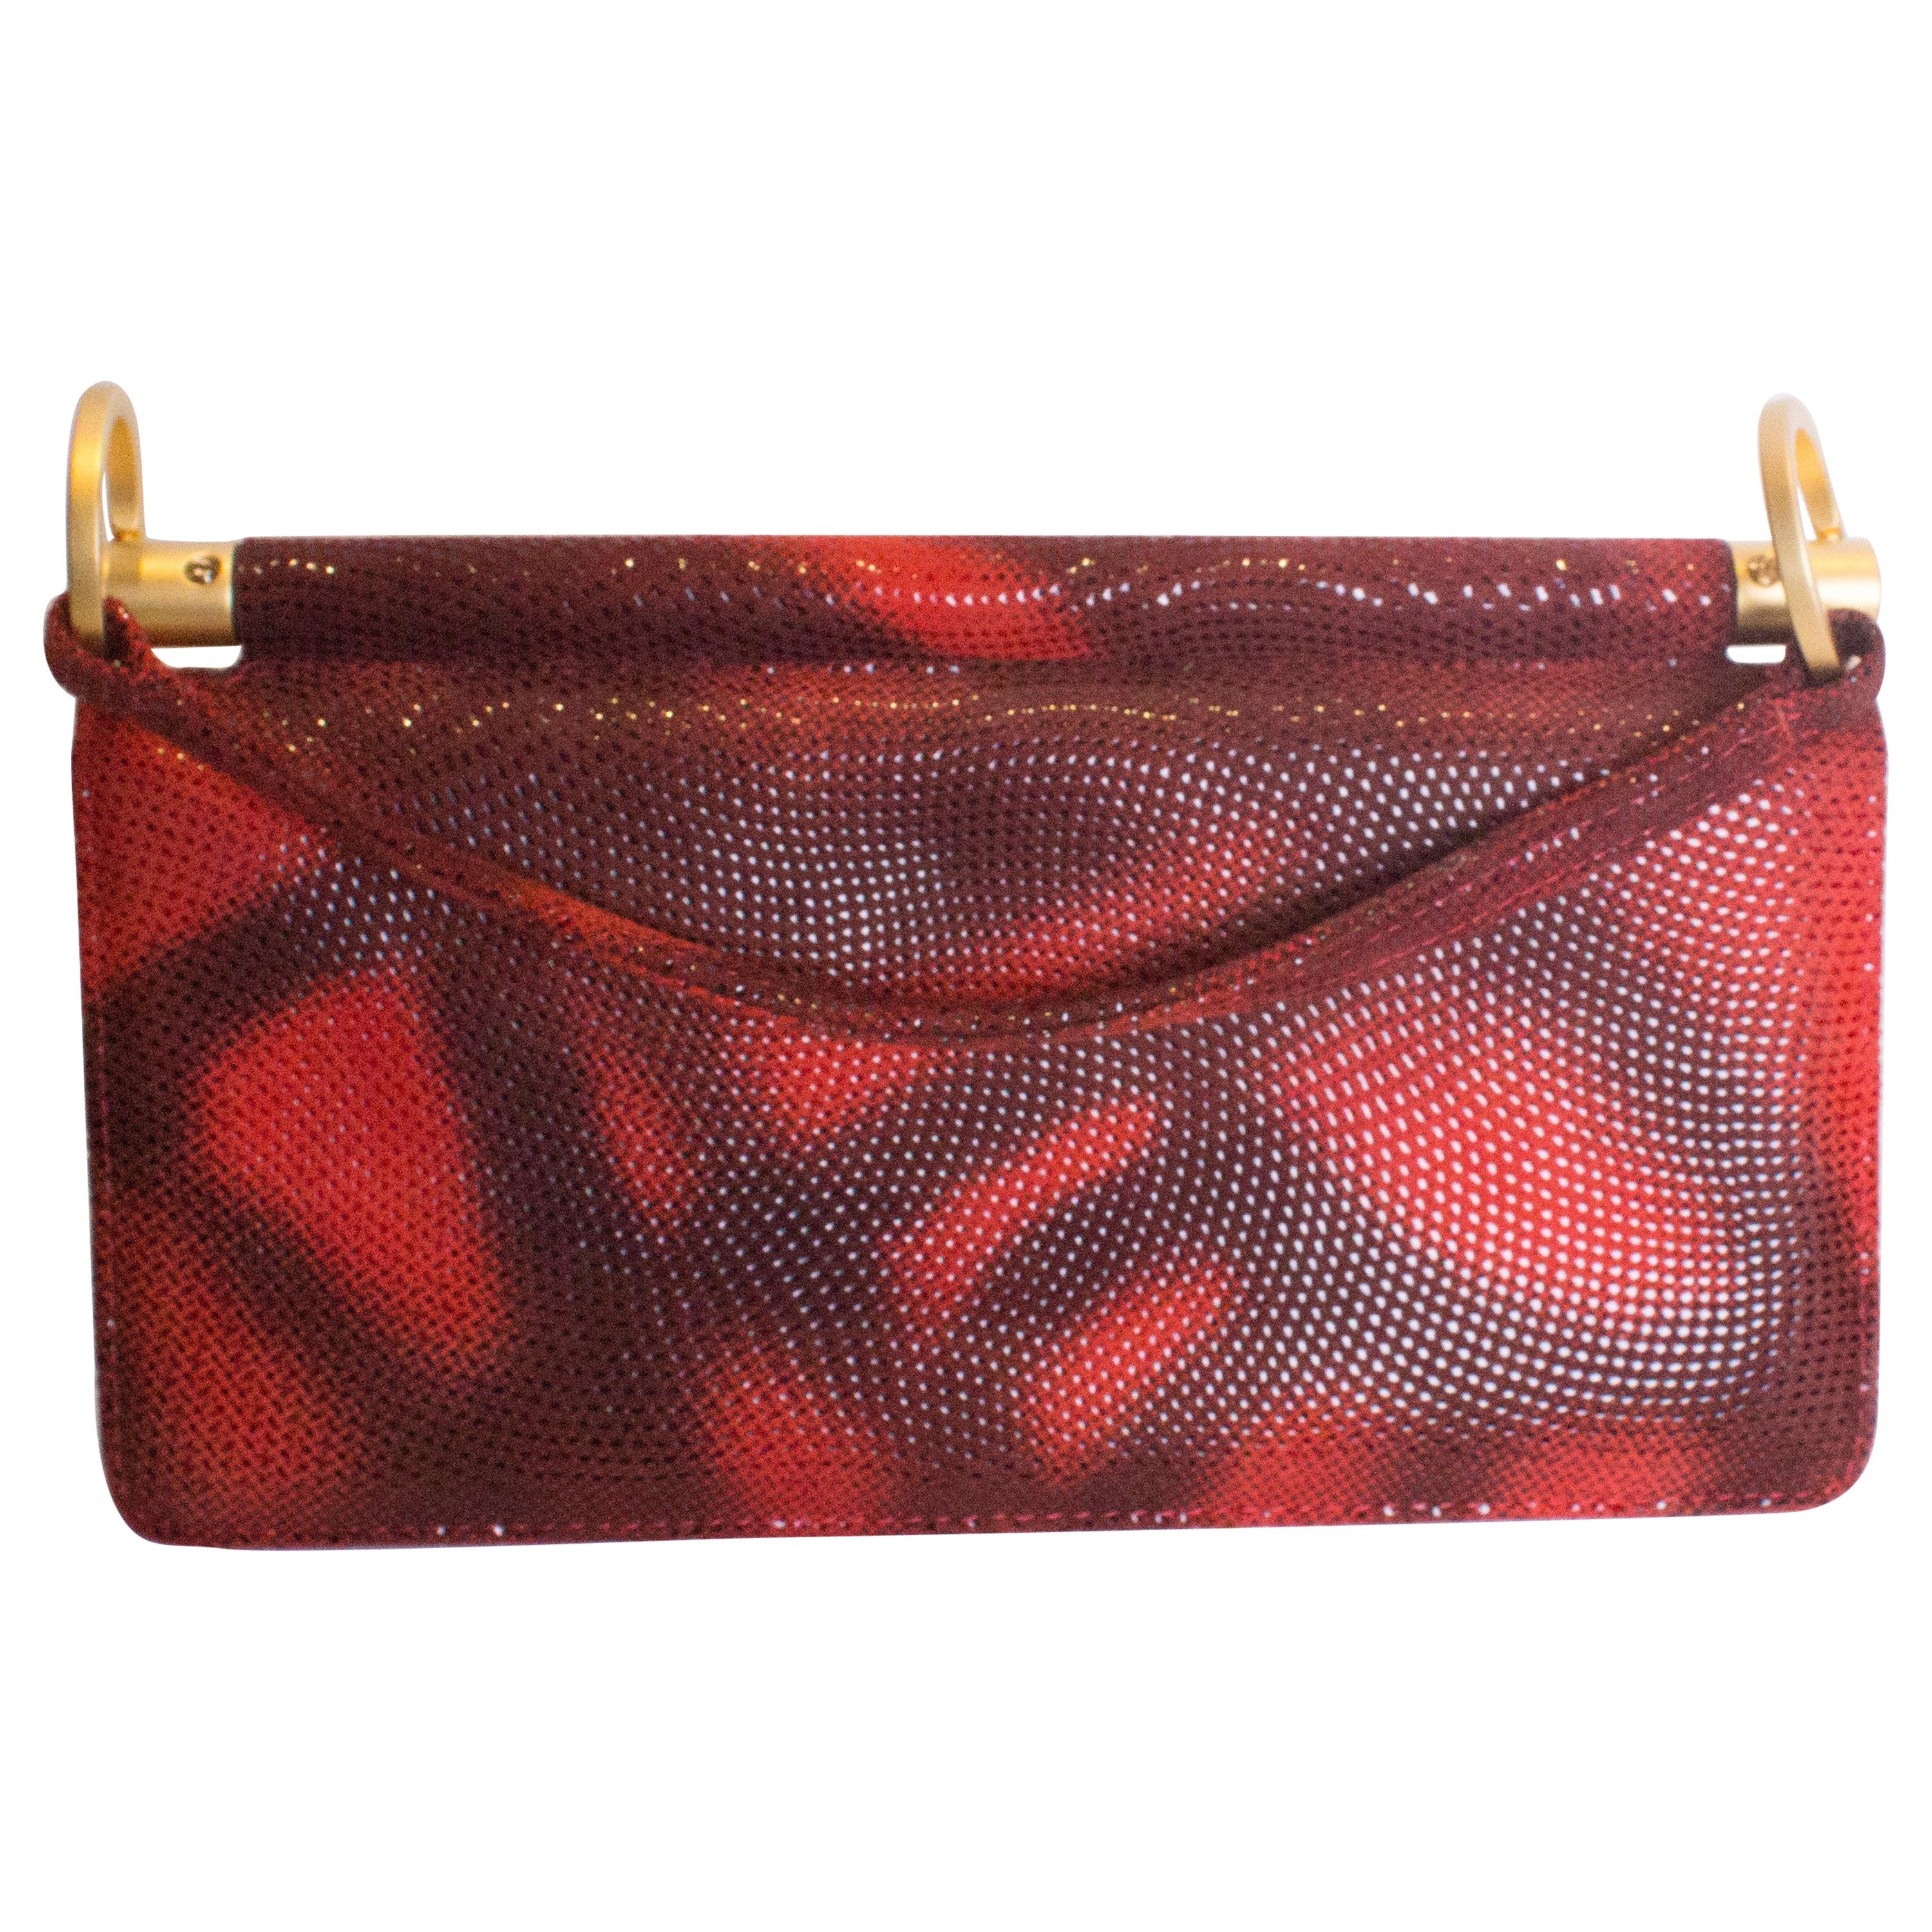 Vintage Charles Jourdan Red Handbag For Sale